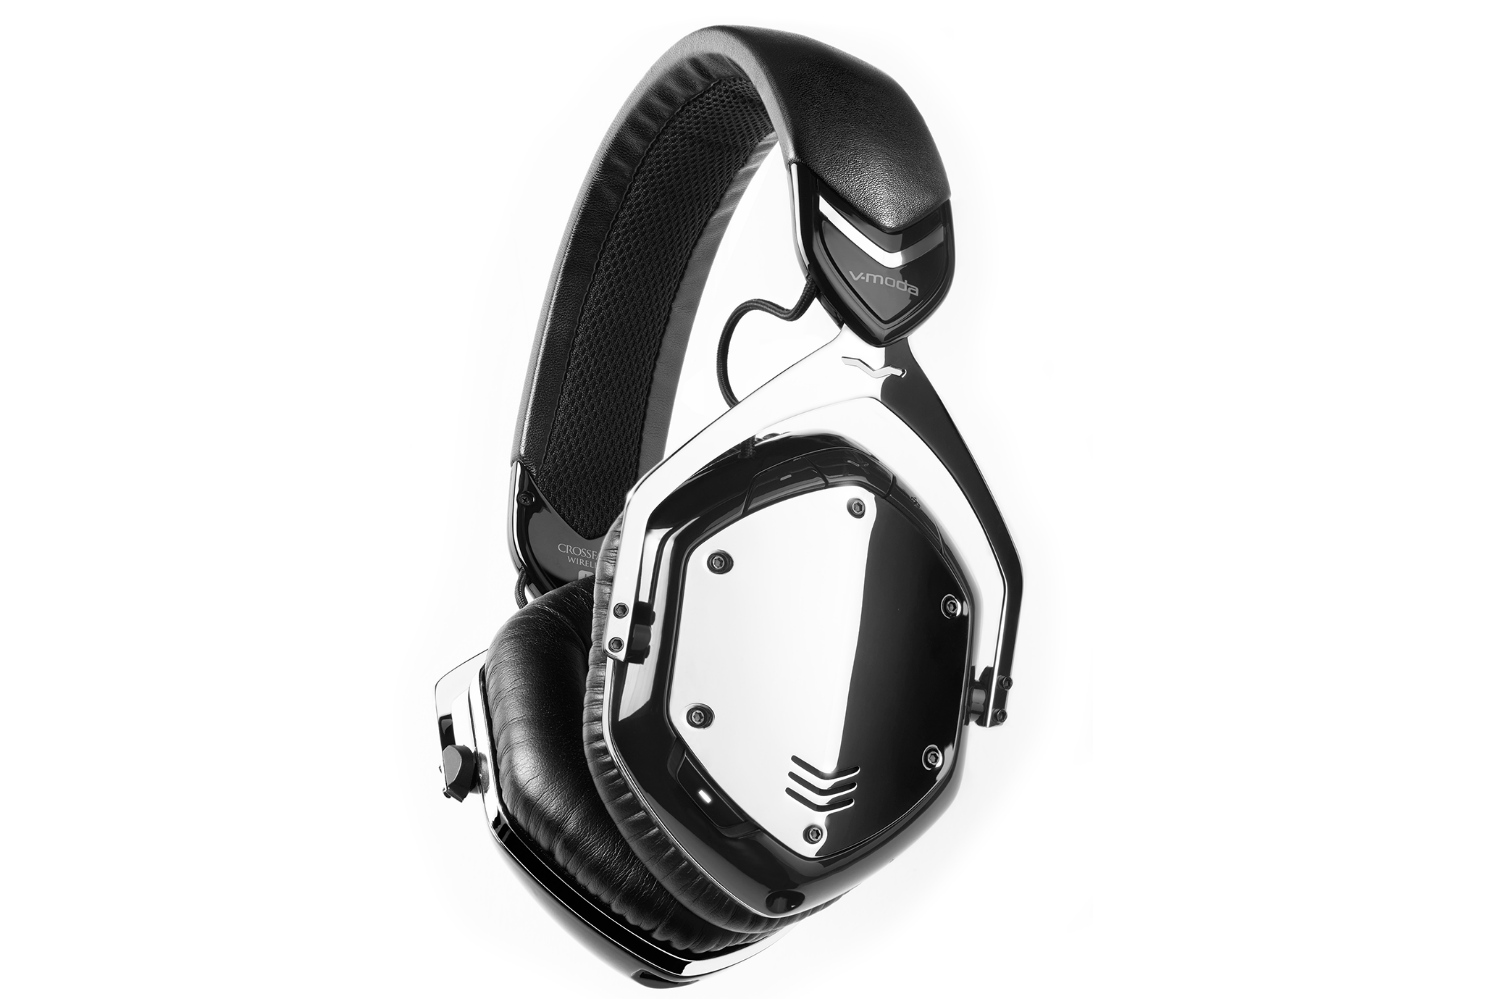 vmoda crossfade wireless headphones reimagined m100 phantom chrome flying web